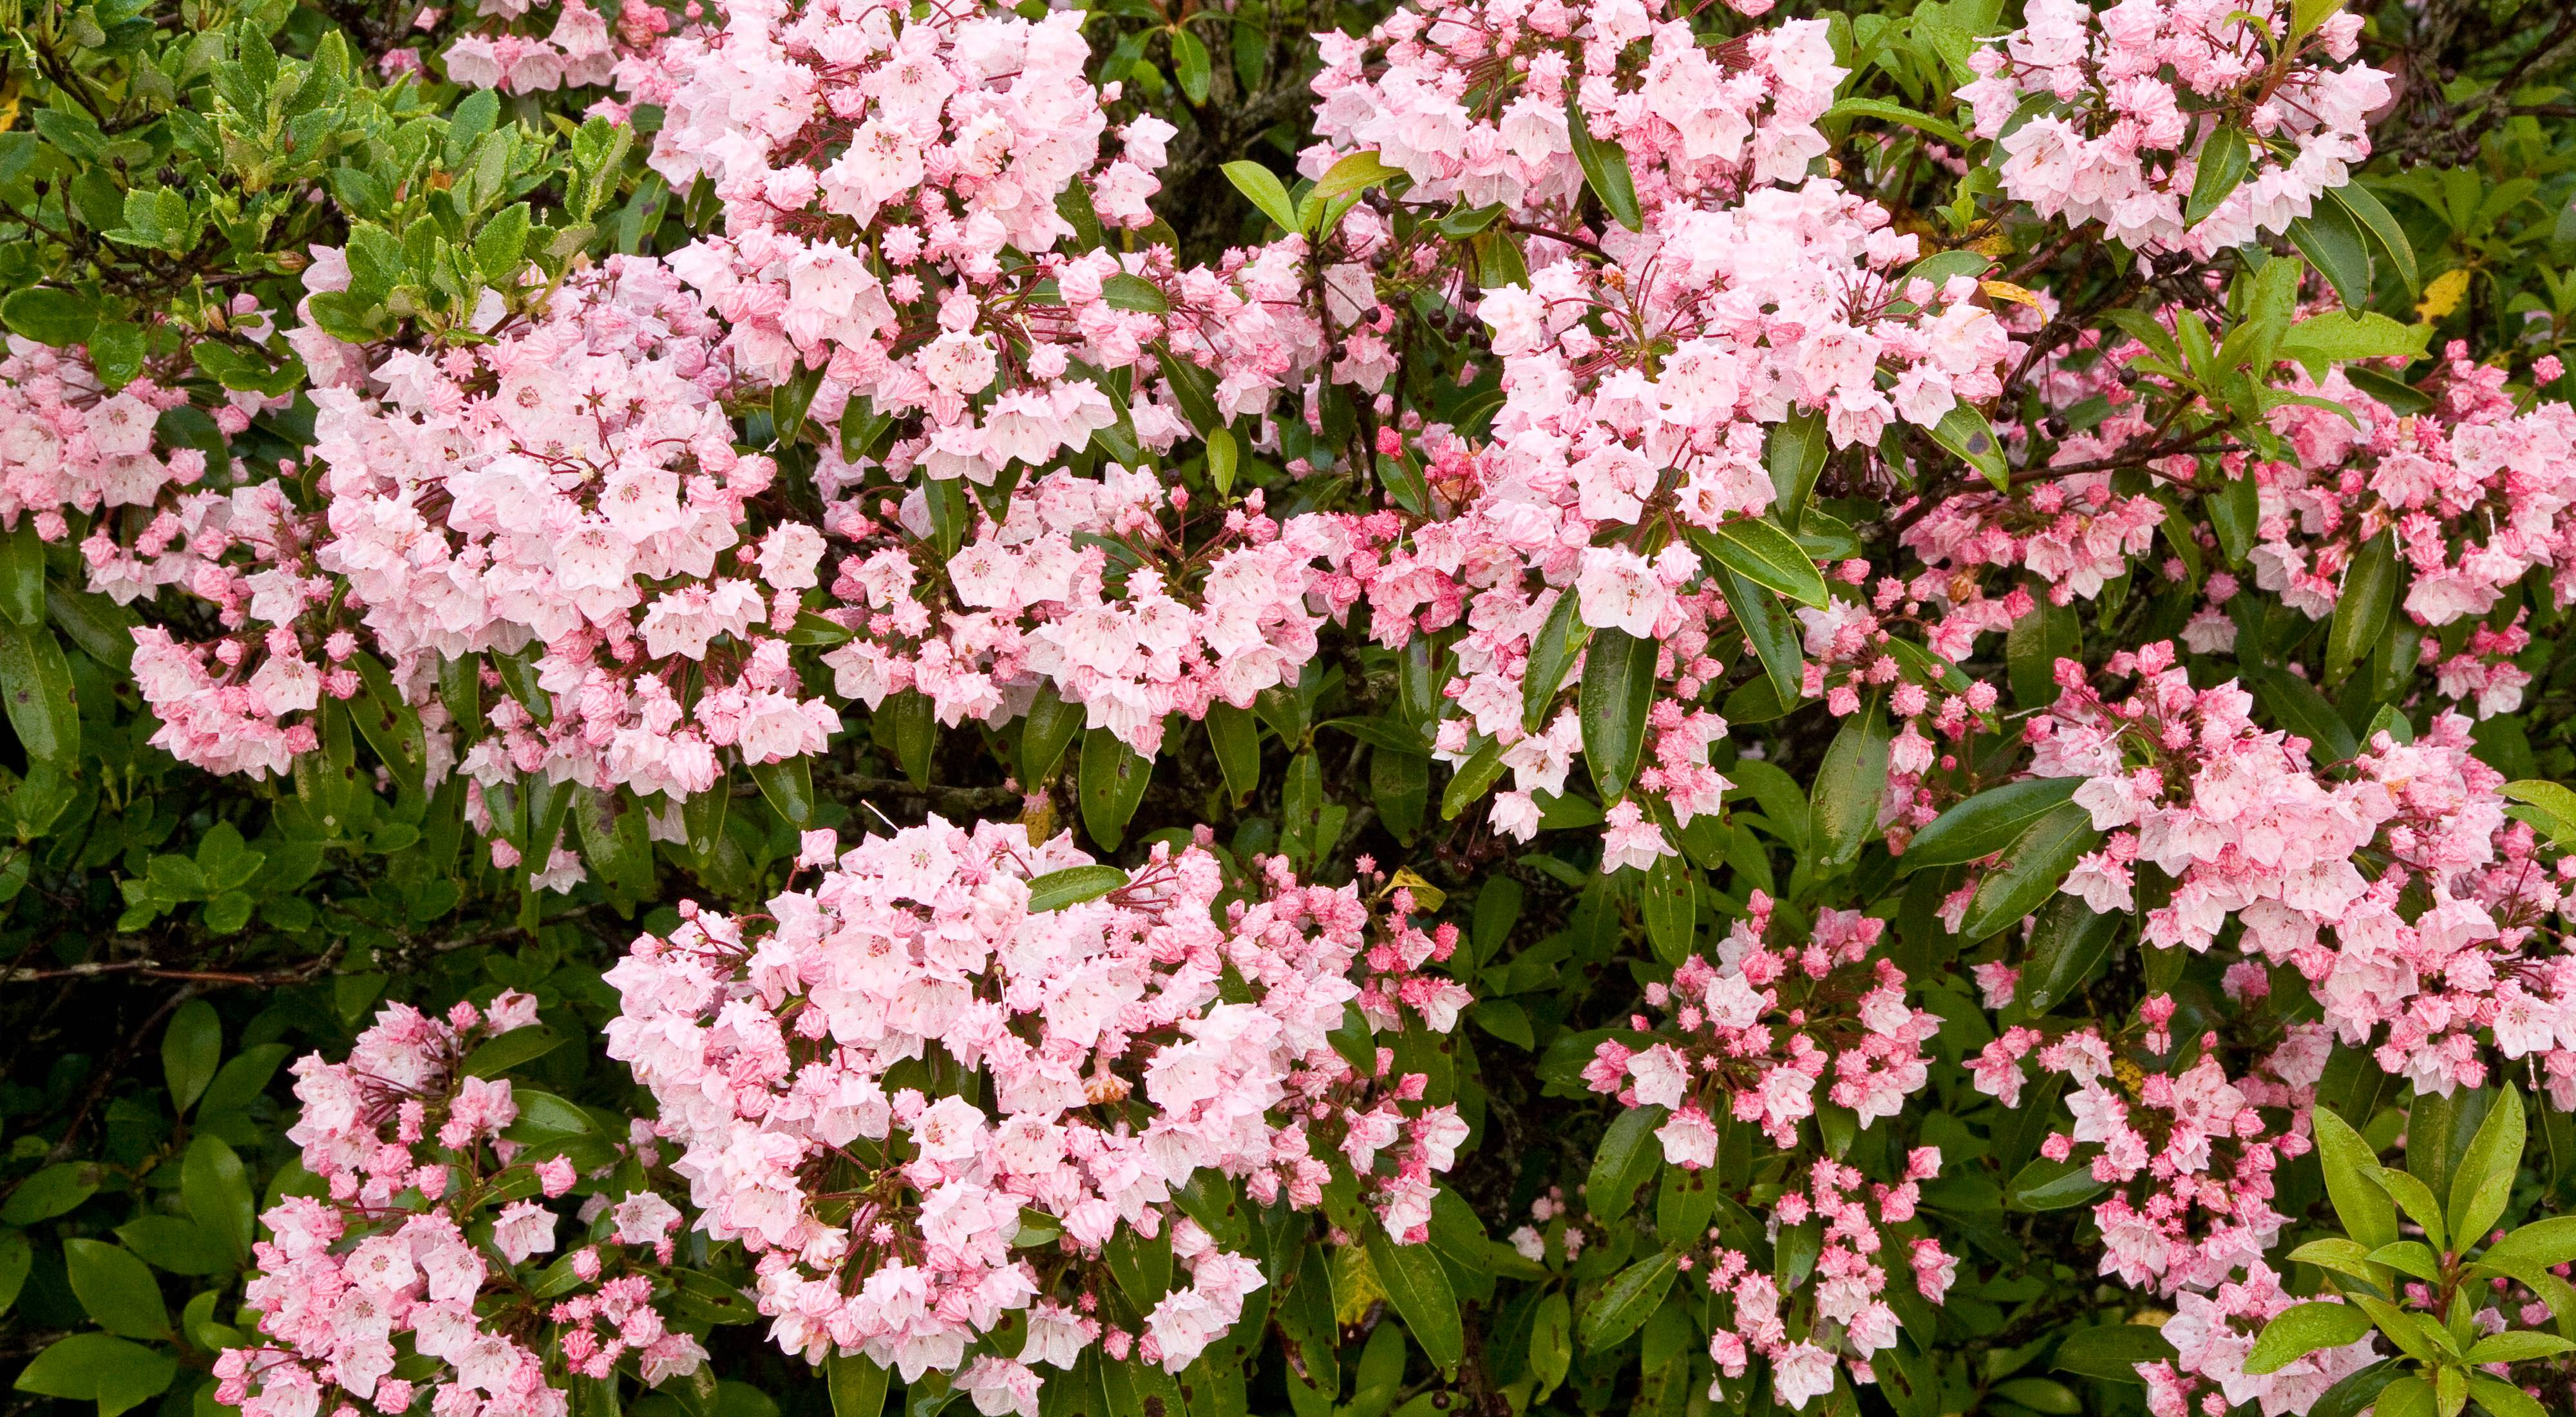 A bush boasts pink flowers in bloom.